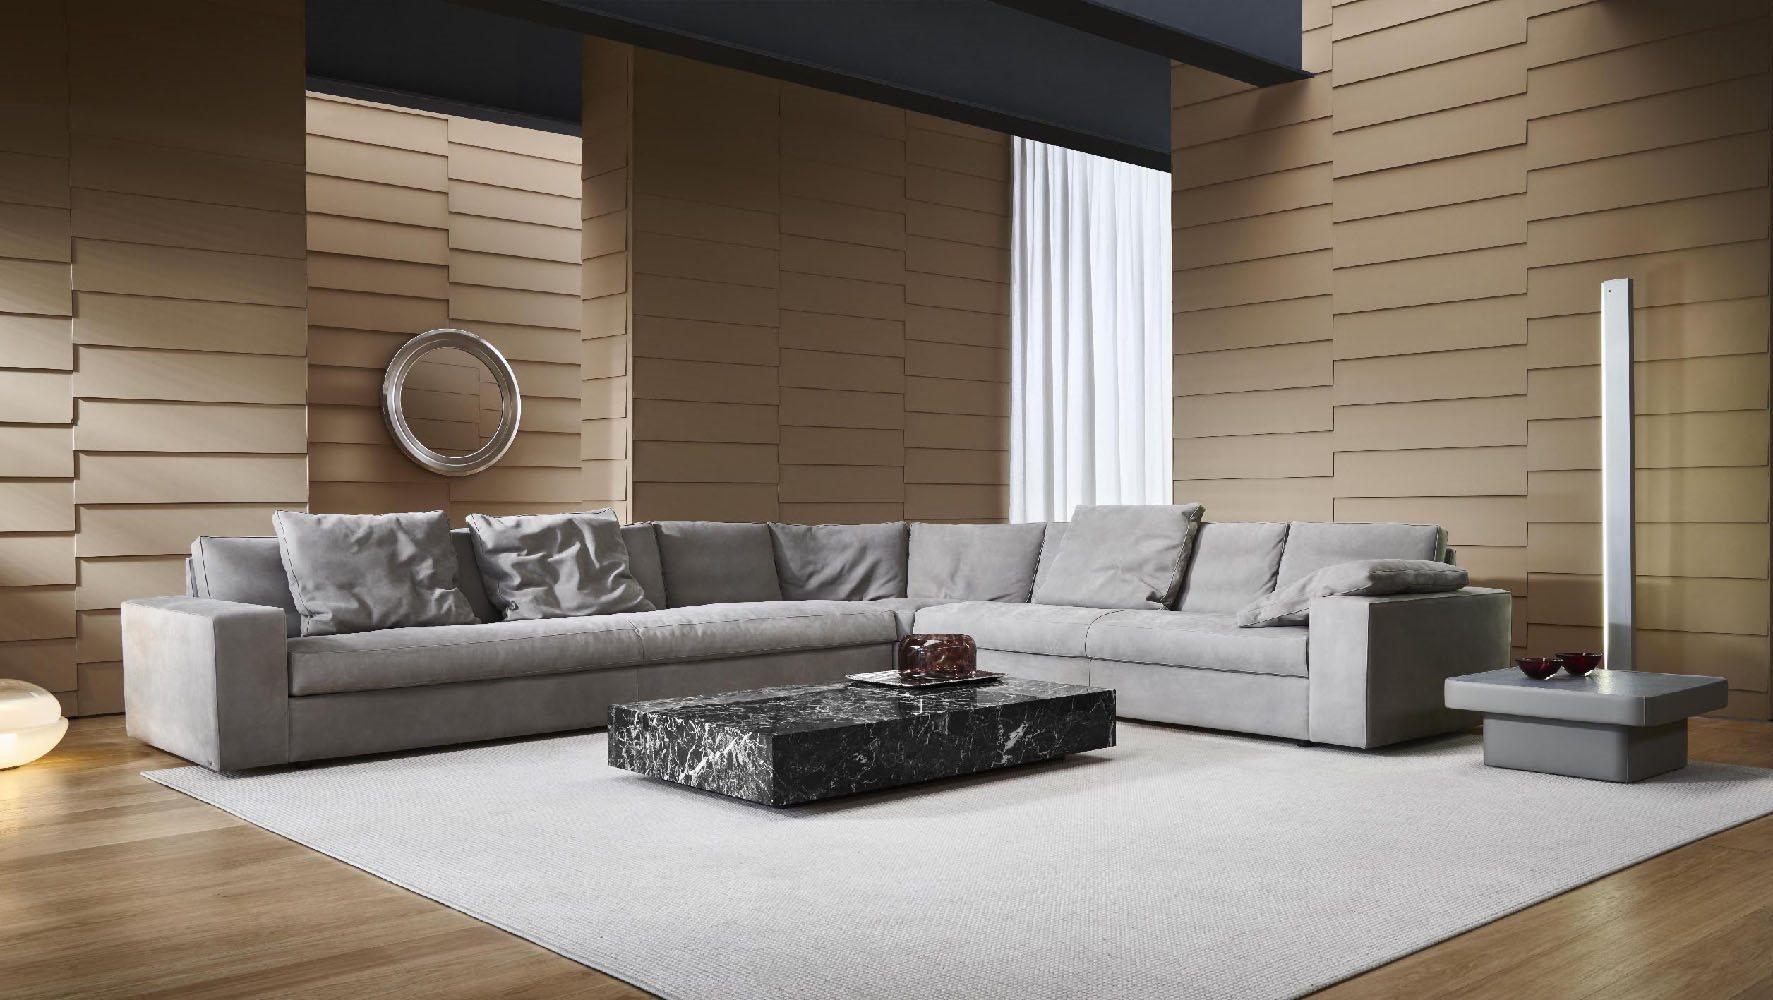 mascheroni沙发产自意大利现代客厅中三个必不可少的绝佳选择